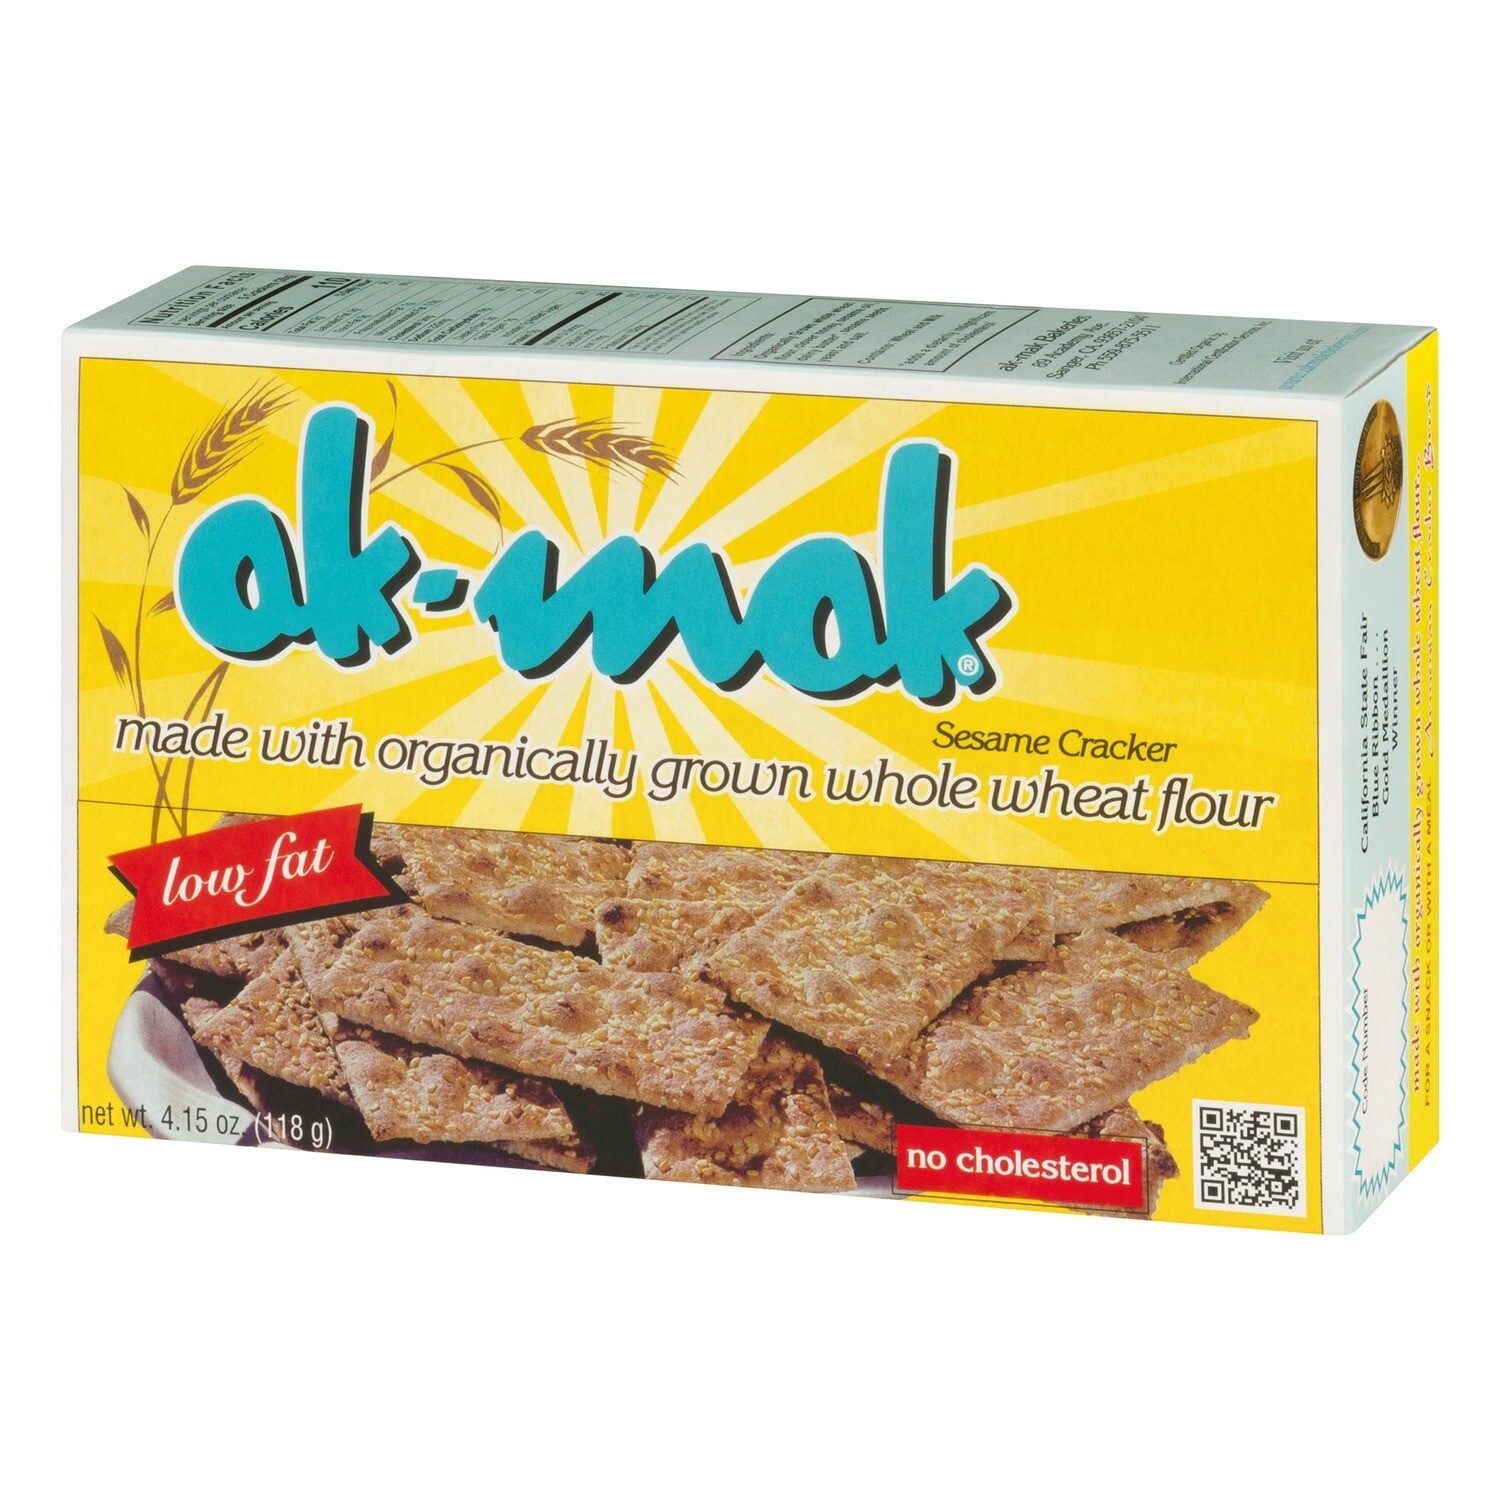 Grocery / Crackers / Ak-Mak Crackers, 4.15 oz